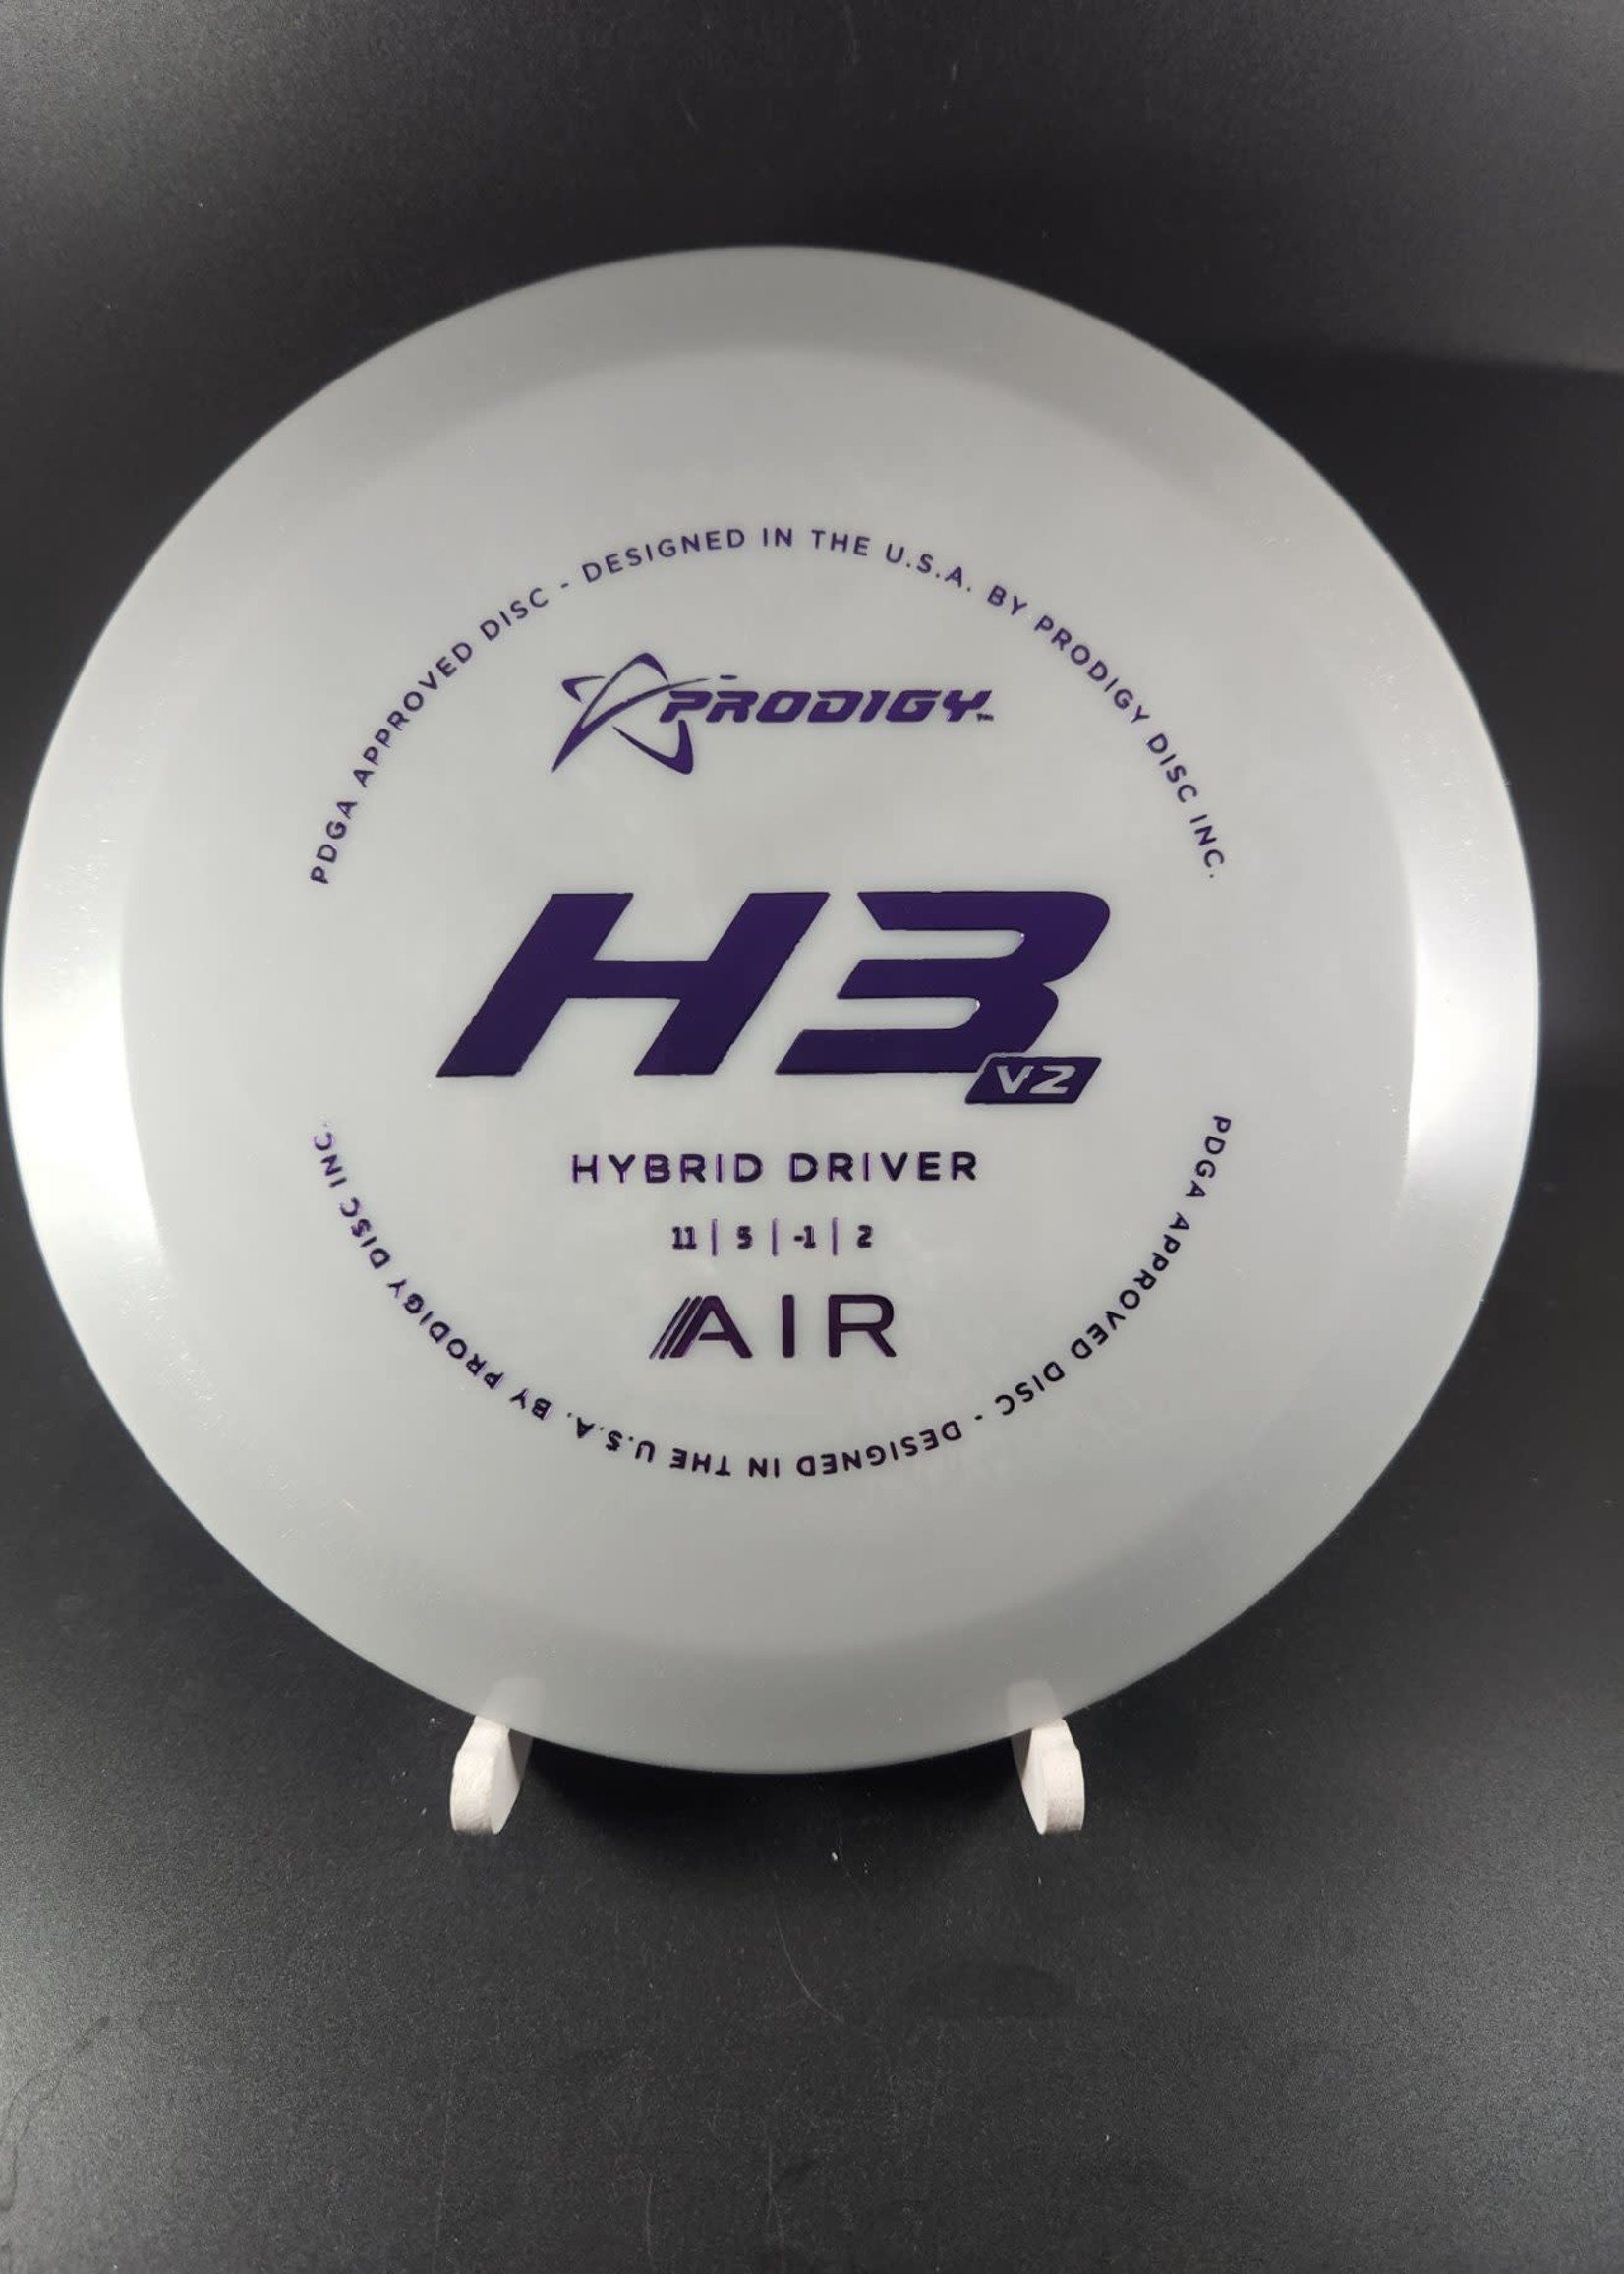 Prodigy Prodigy Air - H3 V2